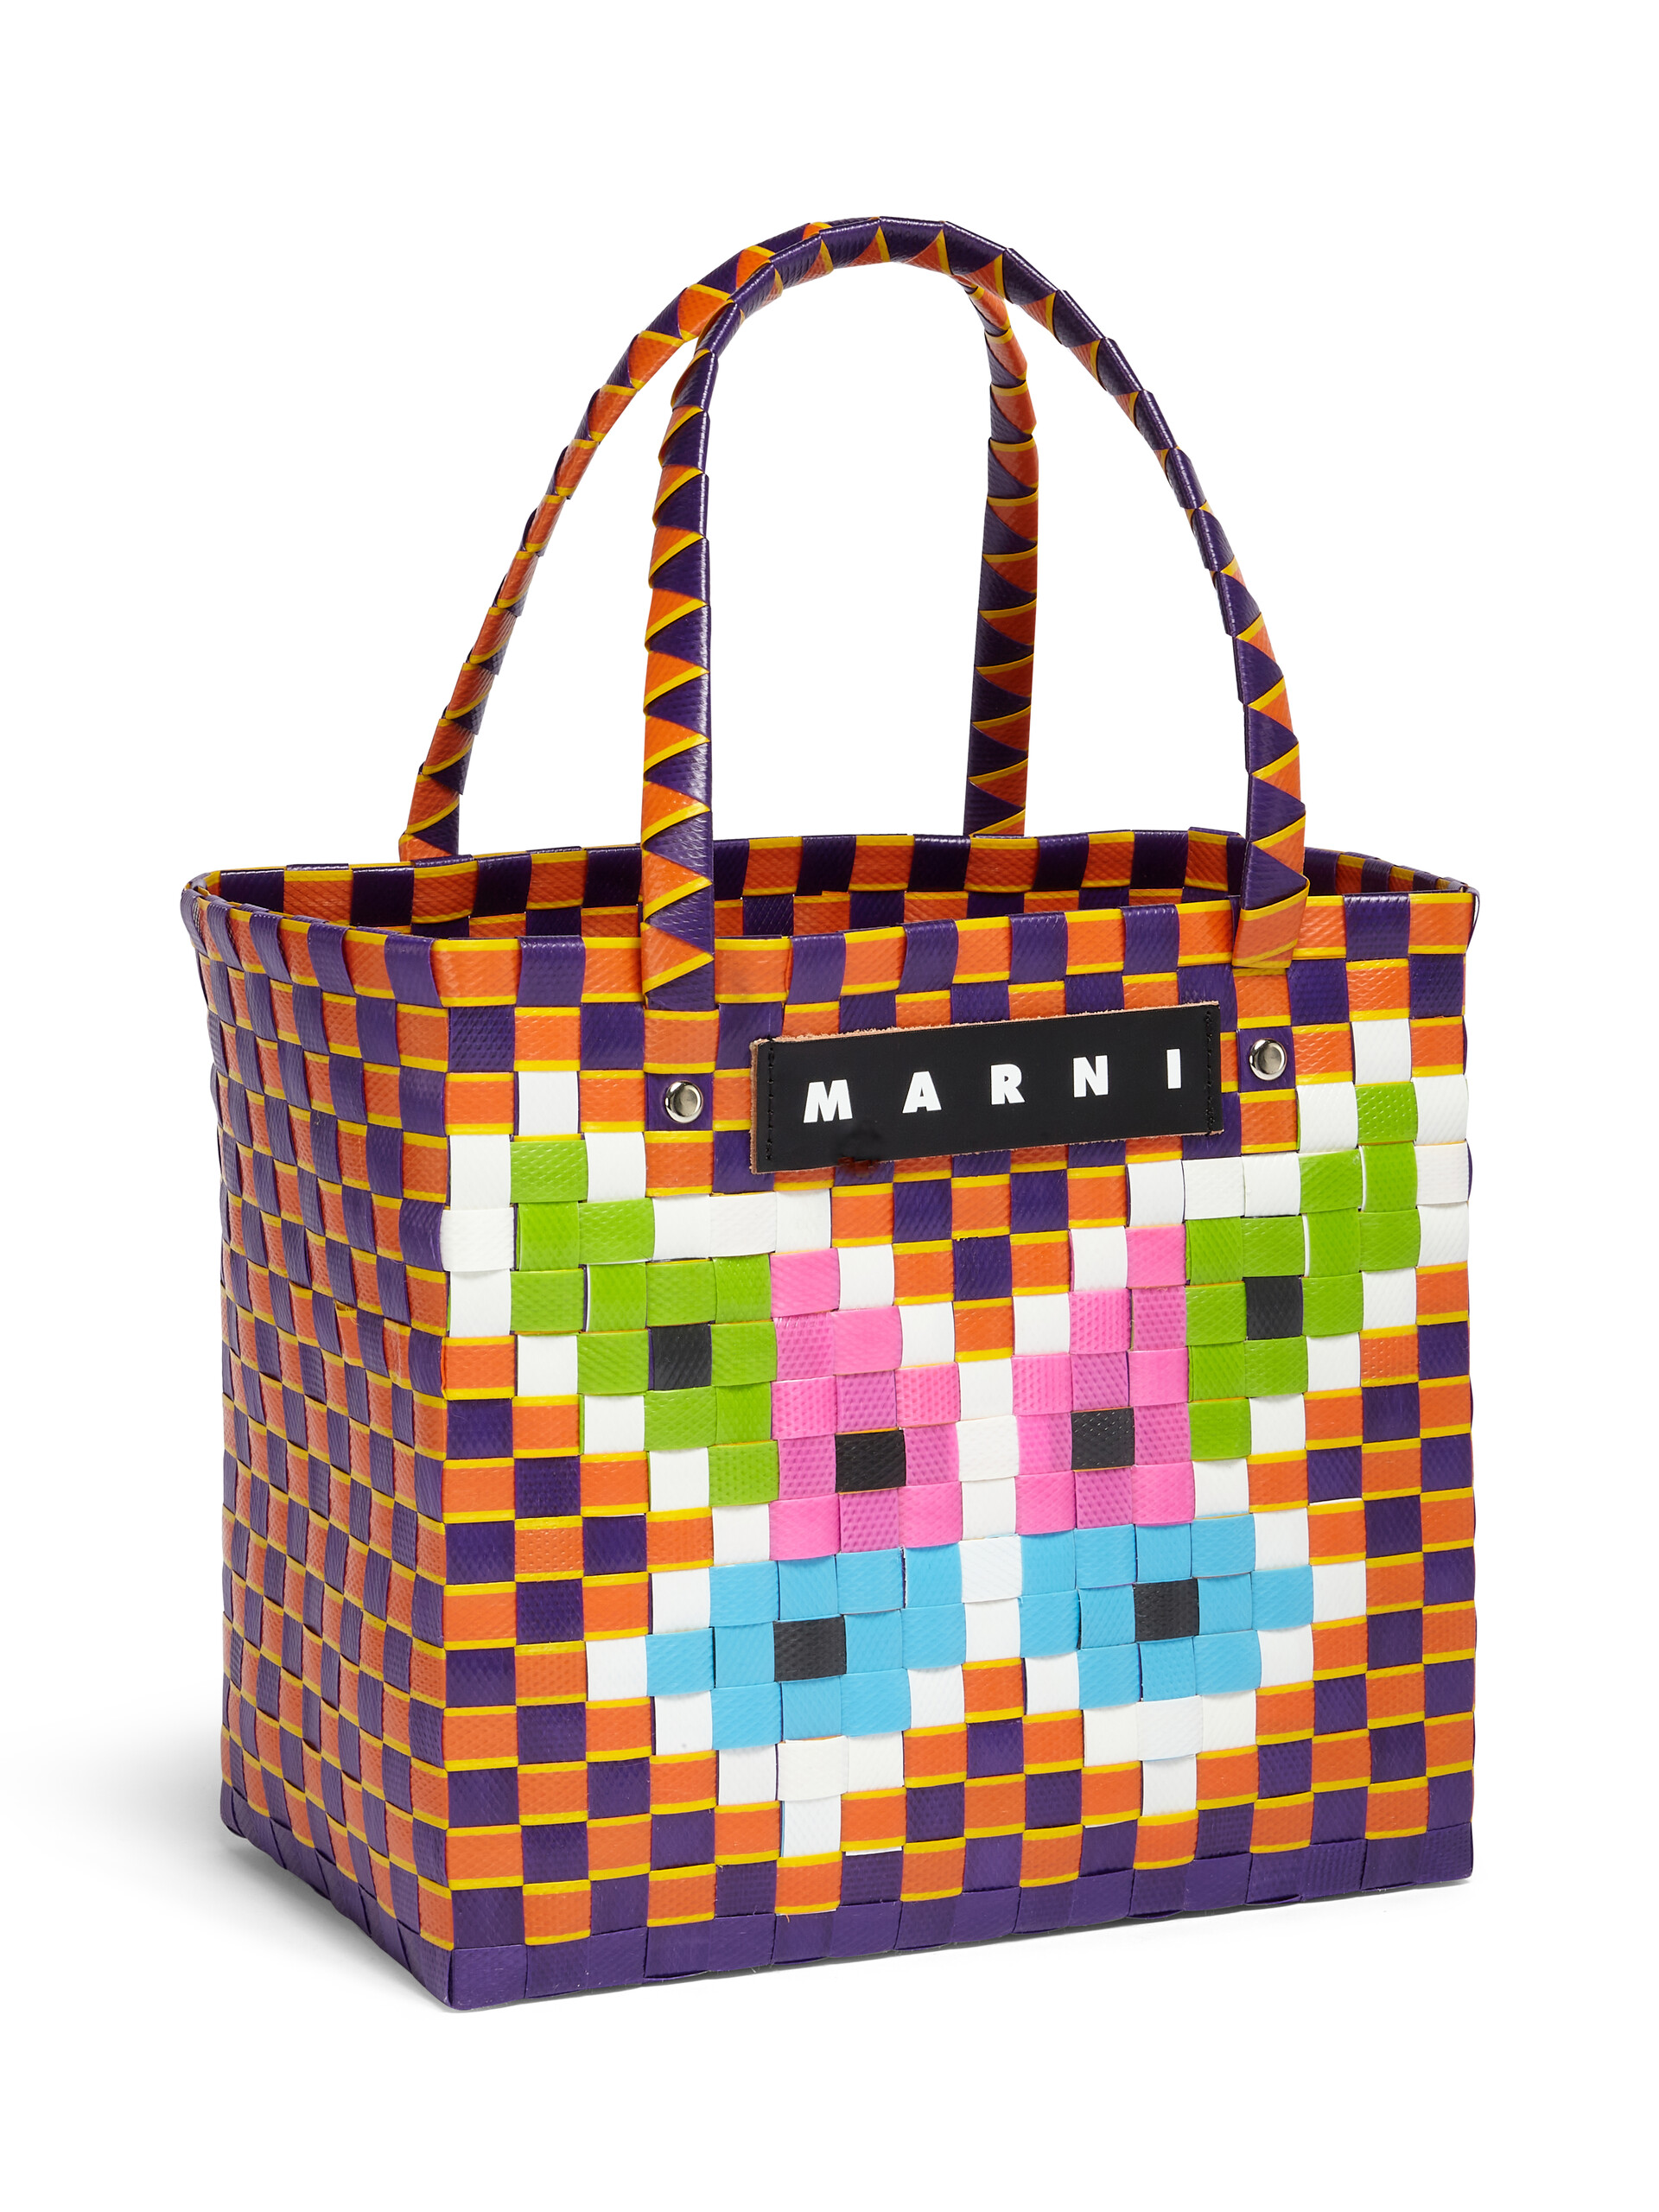 MARNI MARKET FLOWER BASKET bag in orange butterfly motif - Bags - Image 4